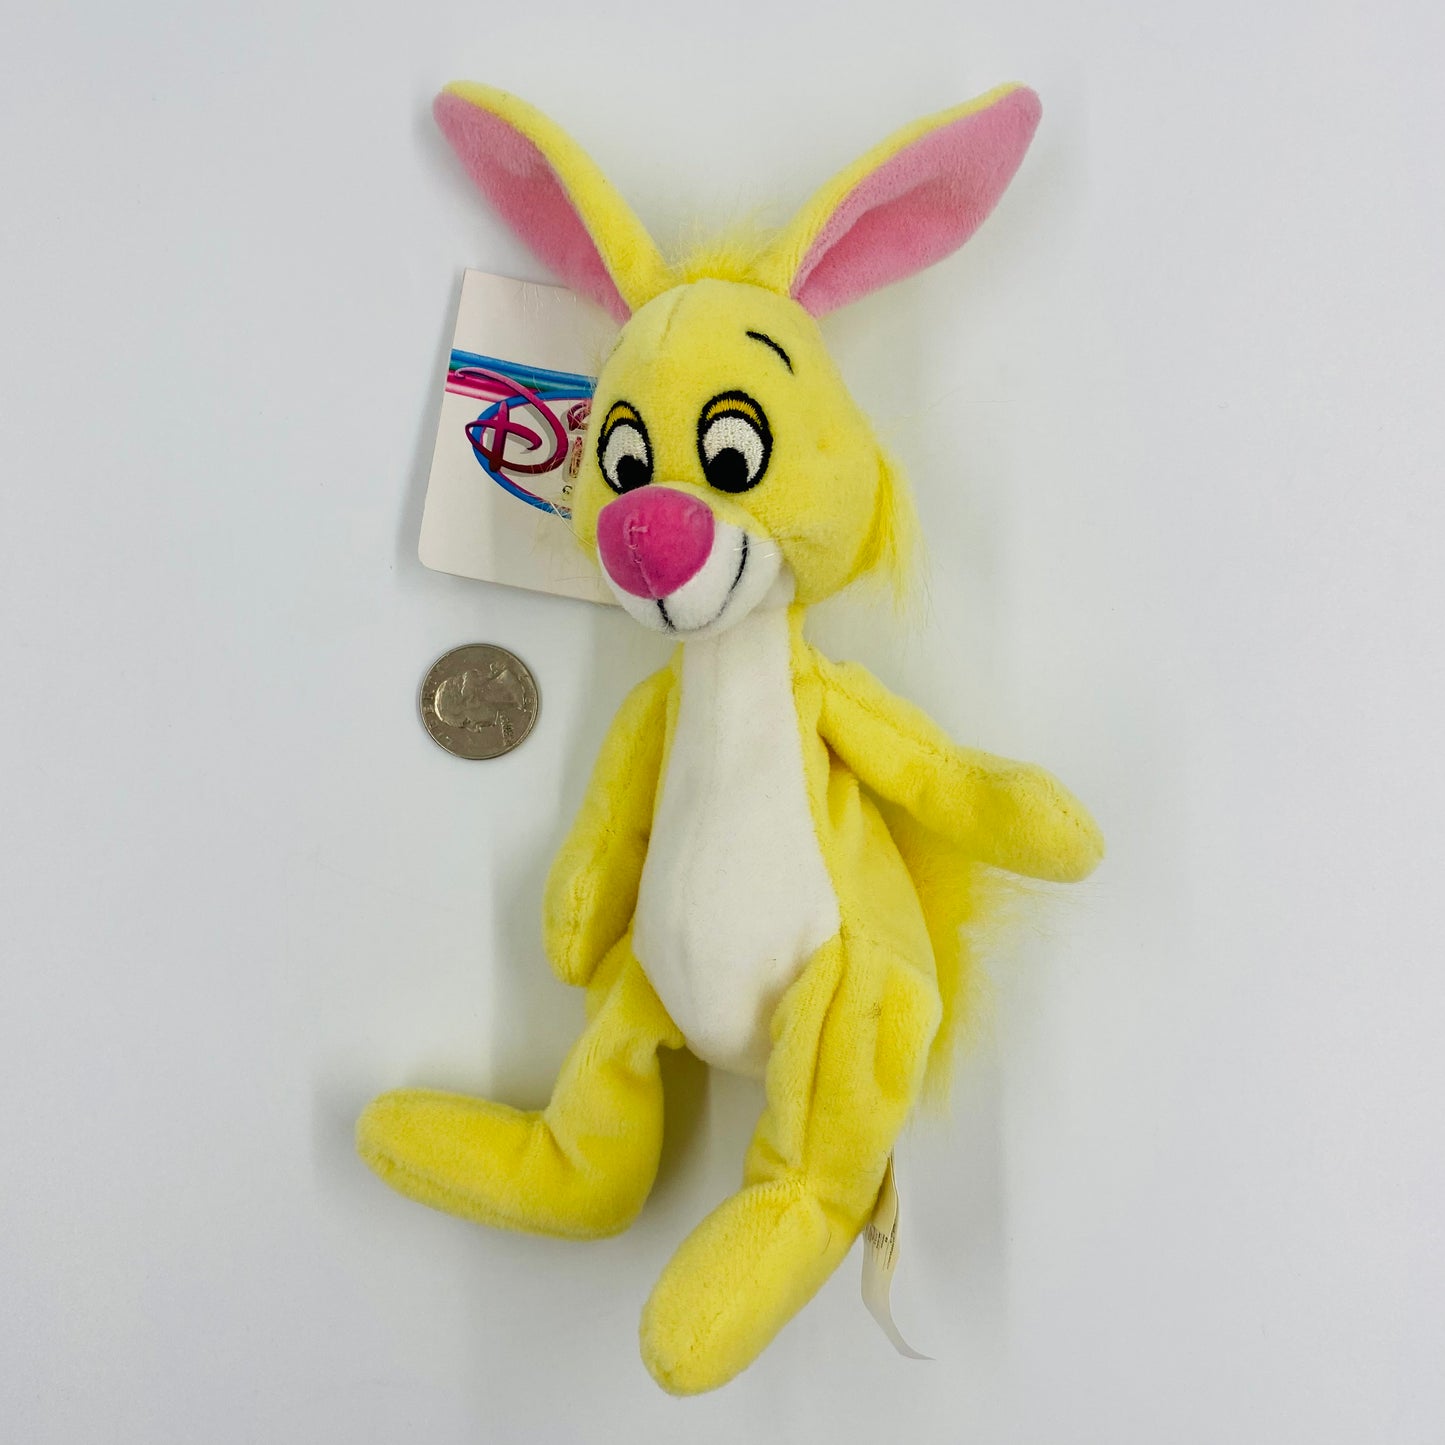 The Disney Store Winnie the Pooh Rabbit mini bean bag plush